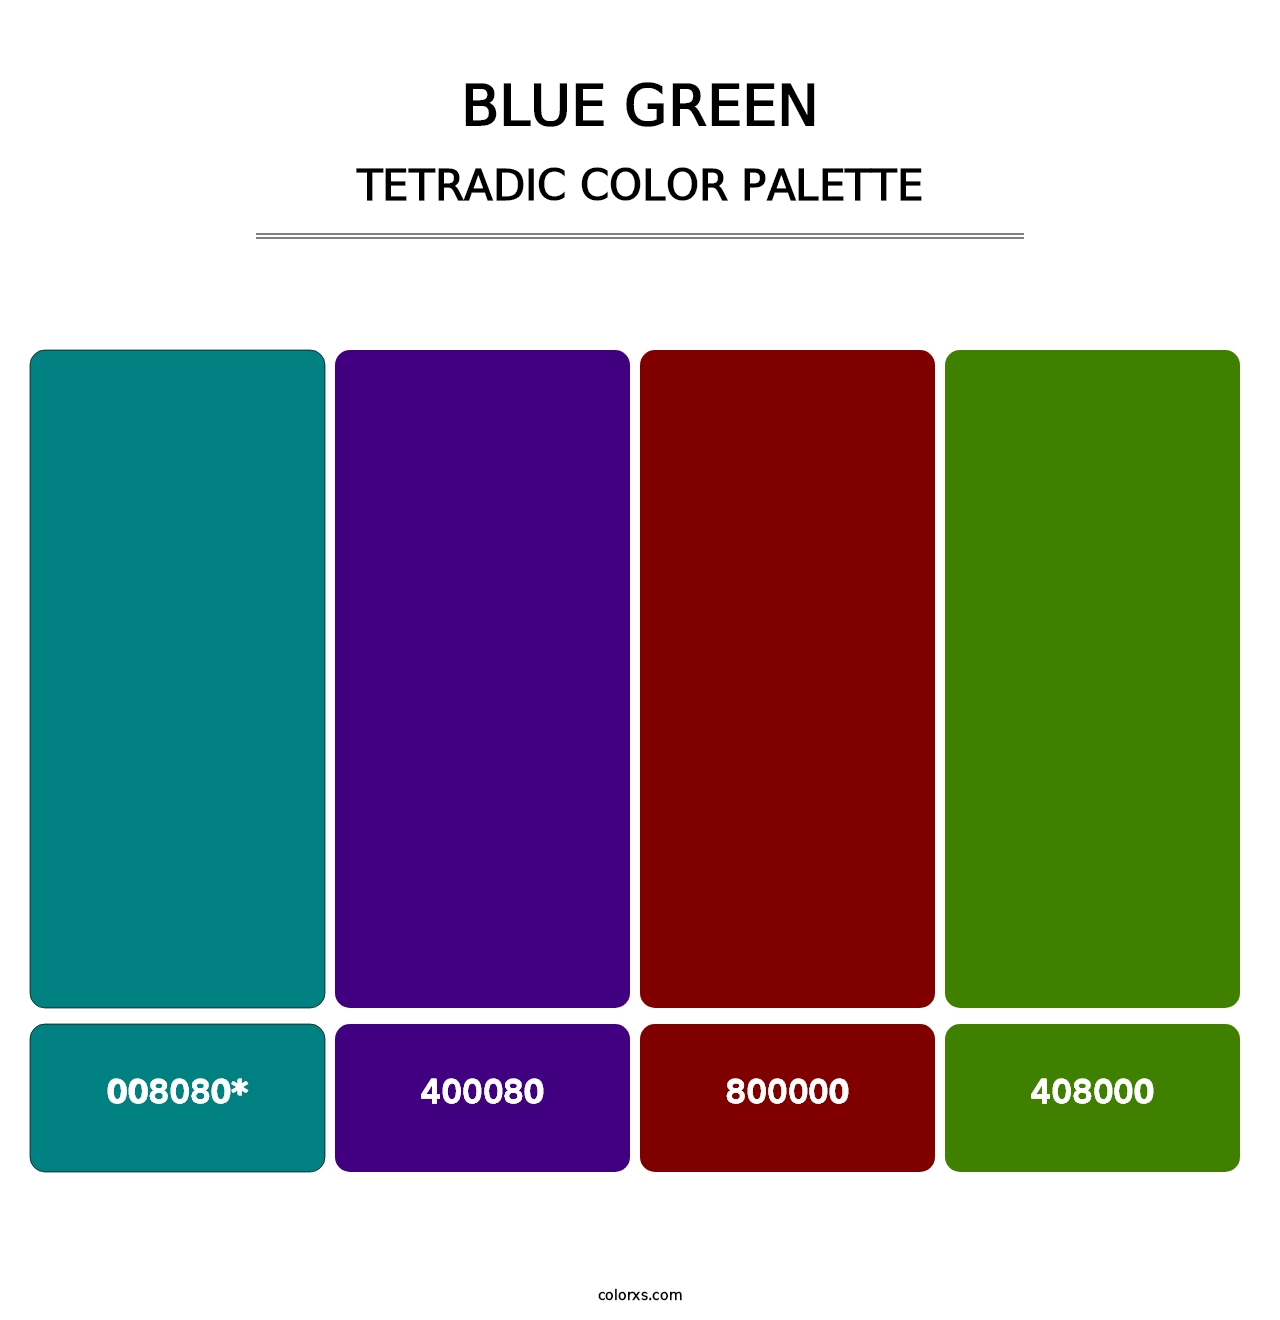 Blue Green - Tetradic Color Palette